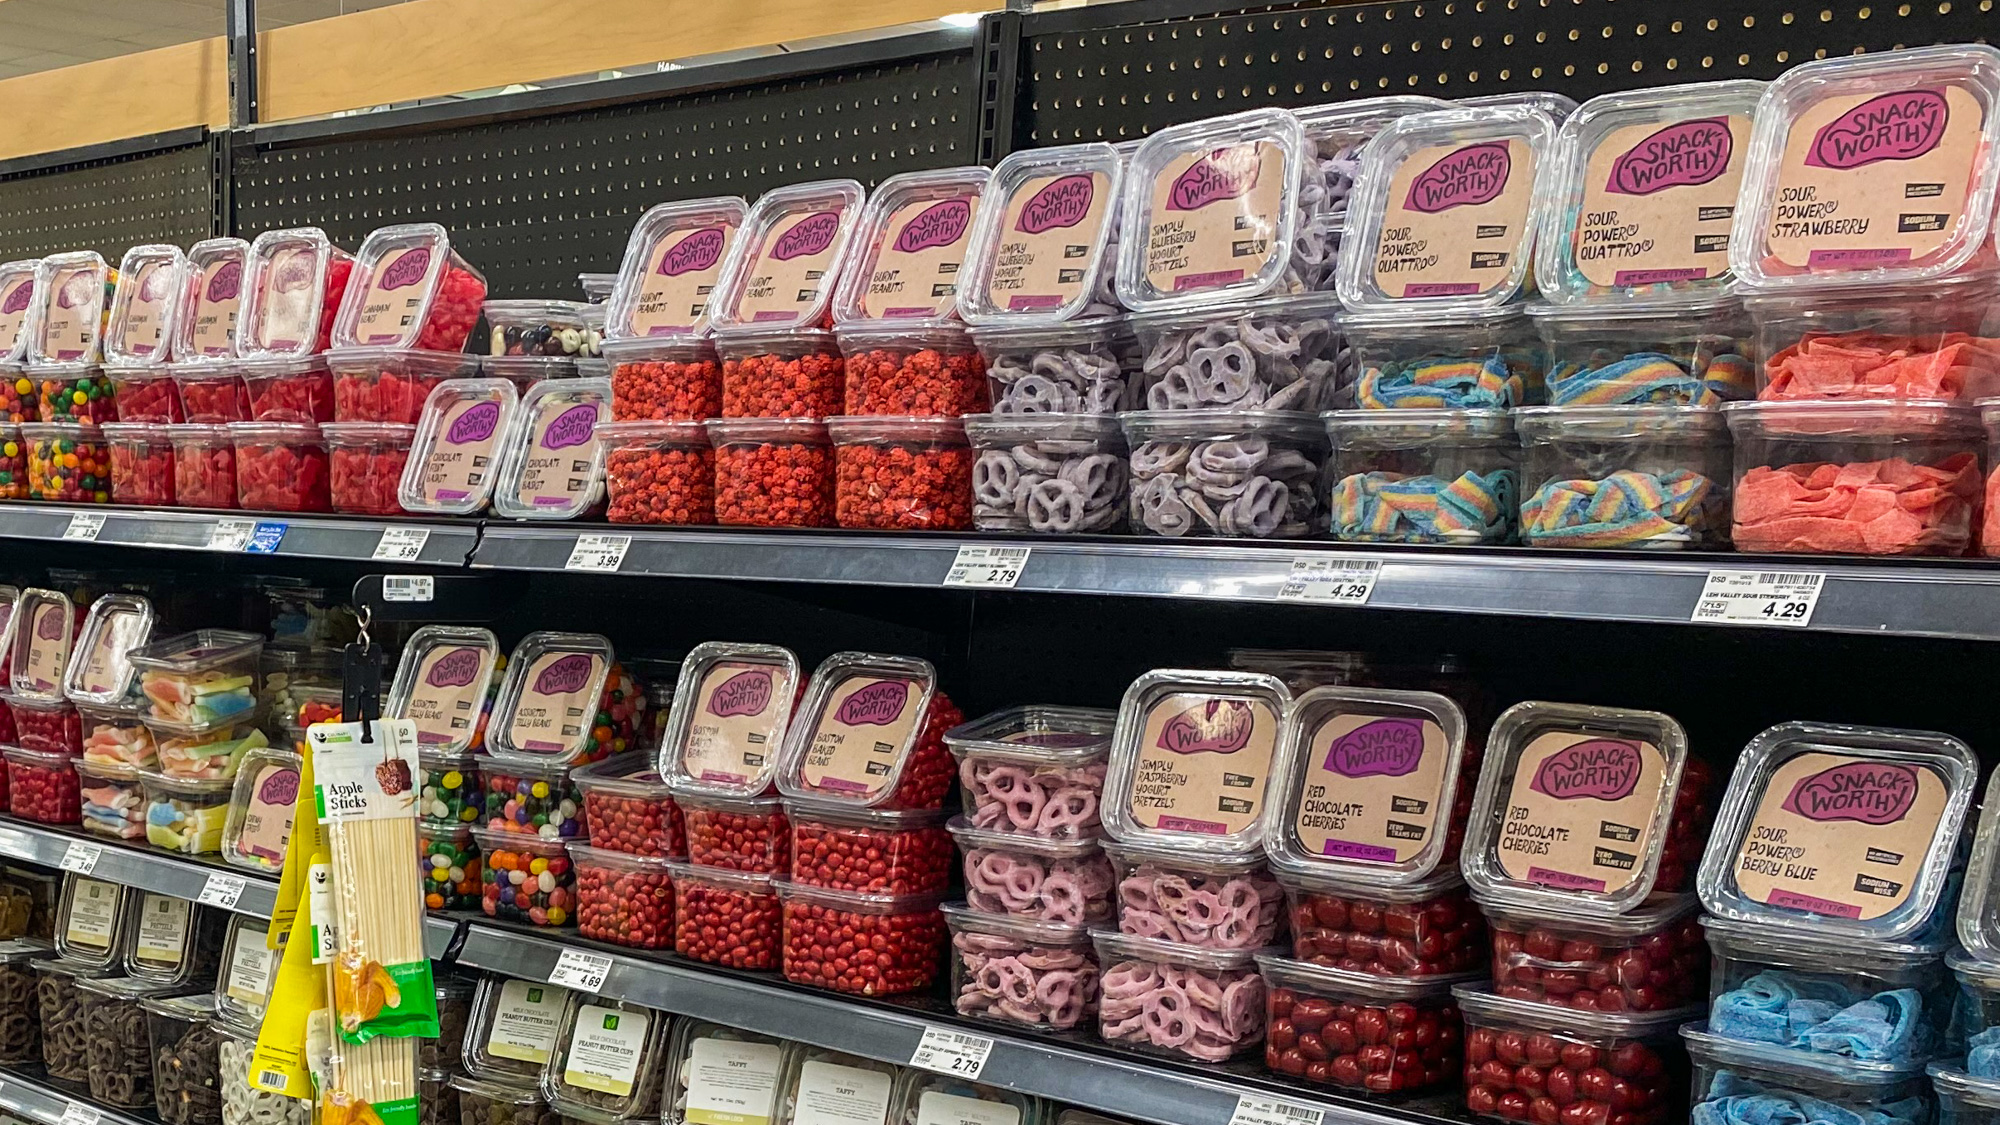 Snackworthy snack tubs on shelf in store